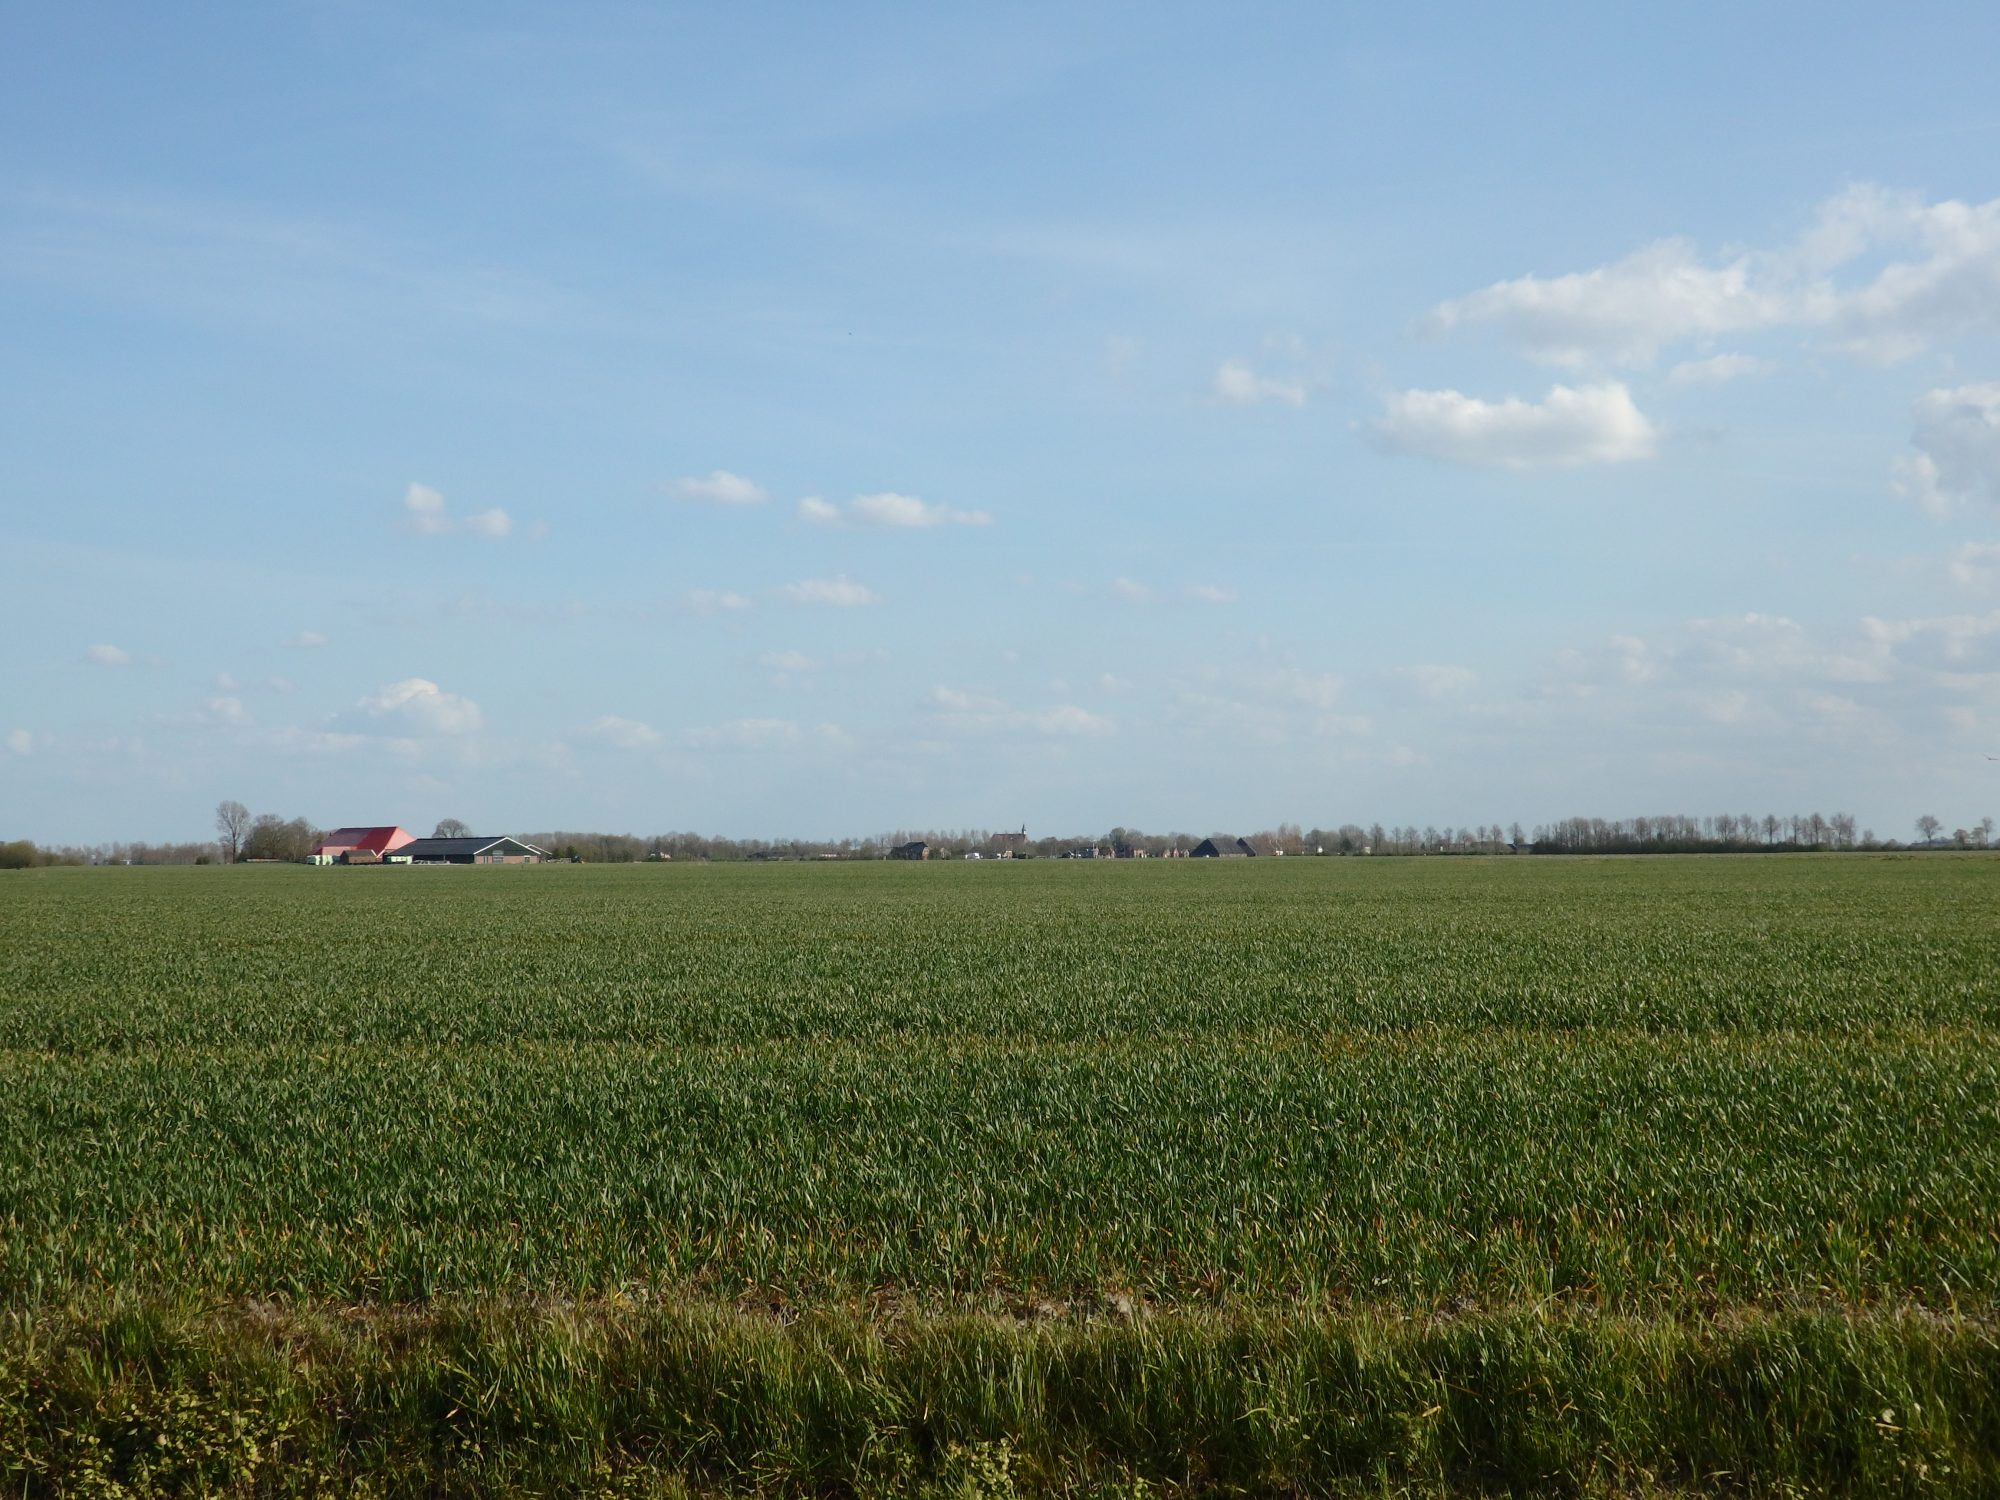 Big sky, flat land: typical Groningen province scenery